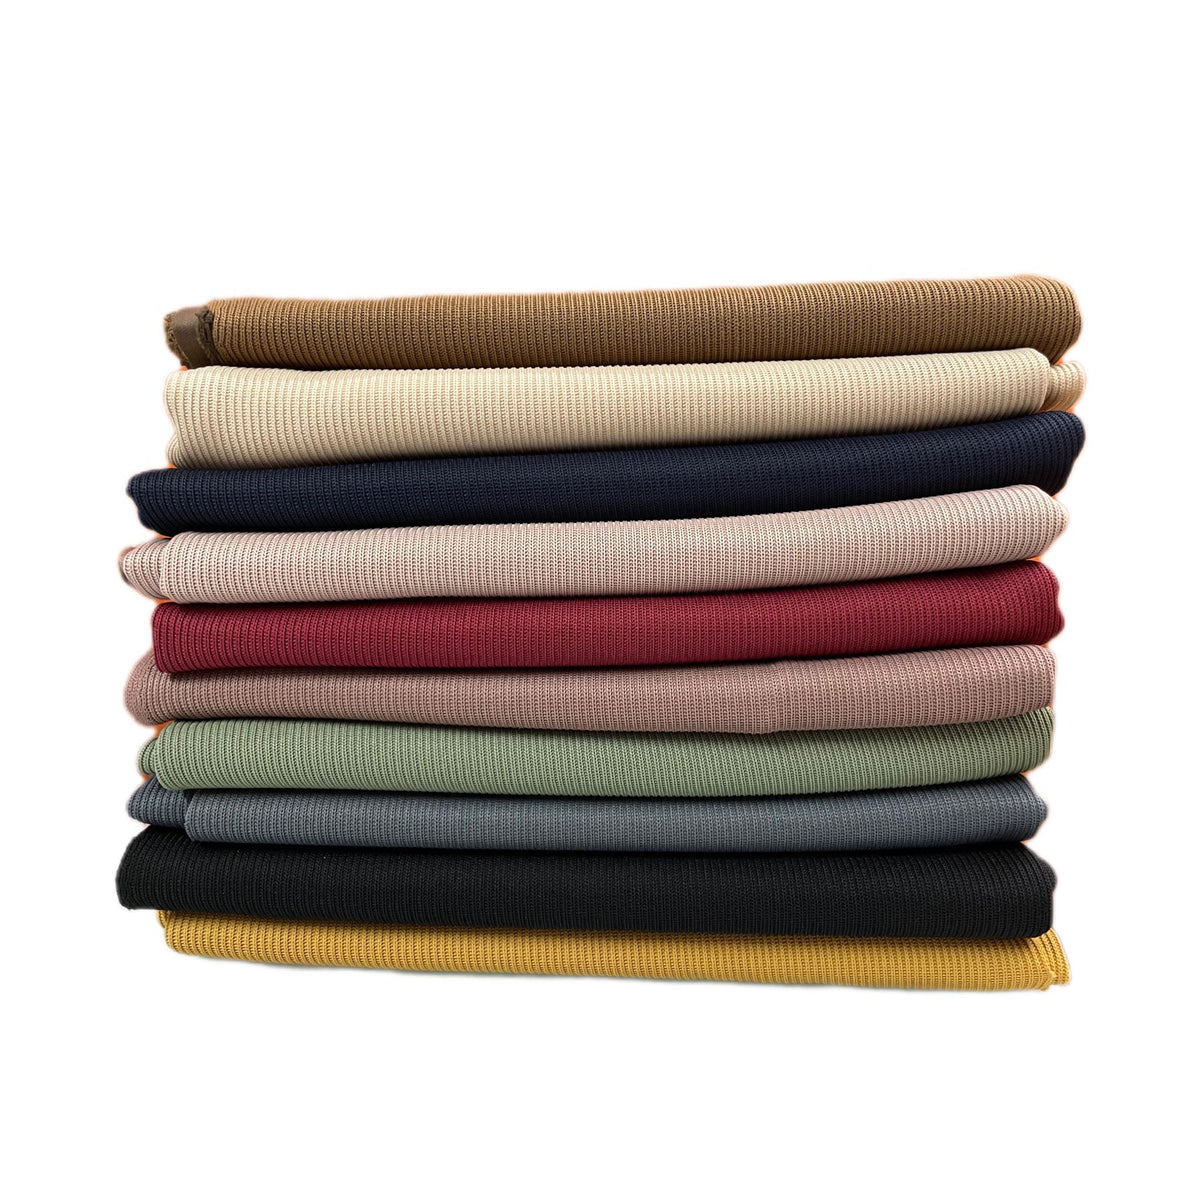 PAPERICIOUS - Cotton Knit Fabric - Cream